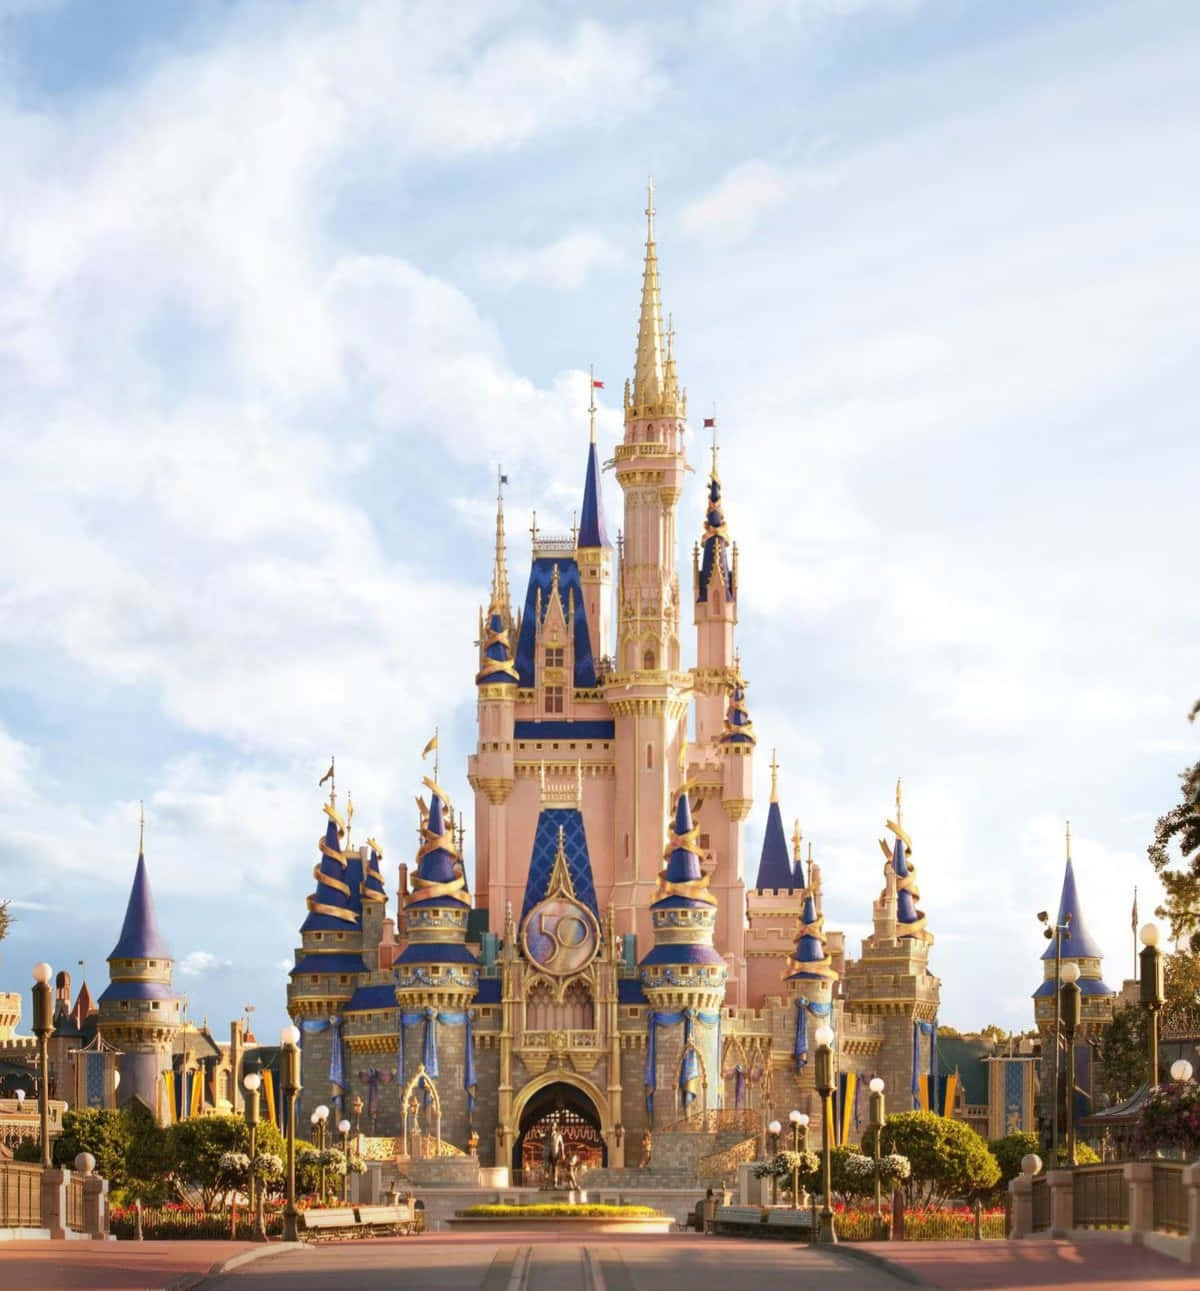 Enjoy a Magical Time at Disney World